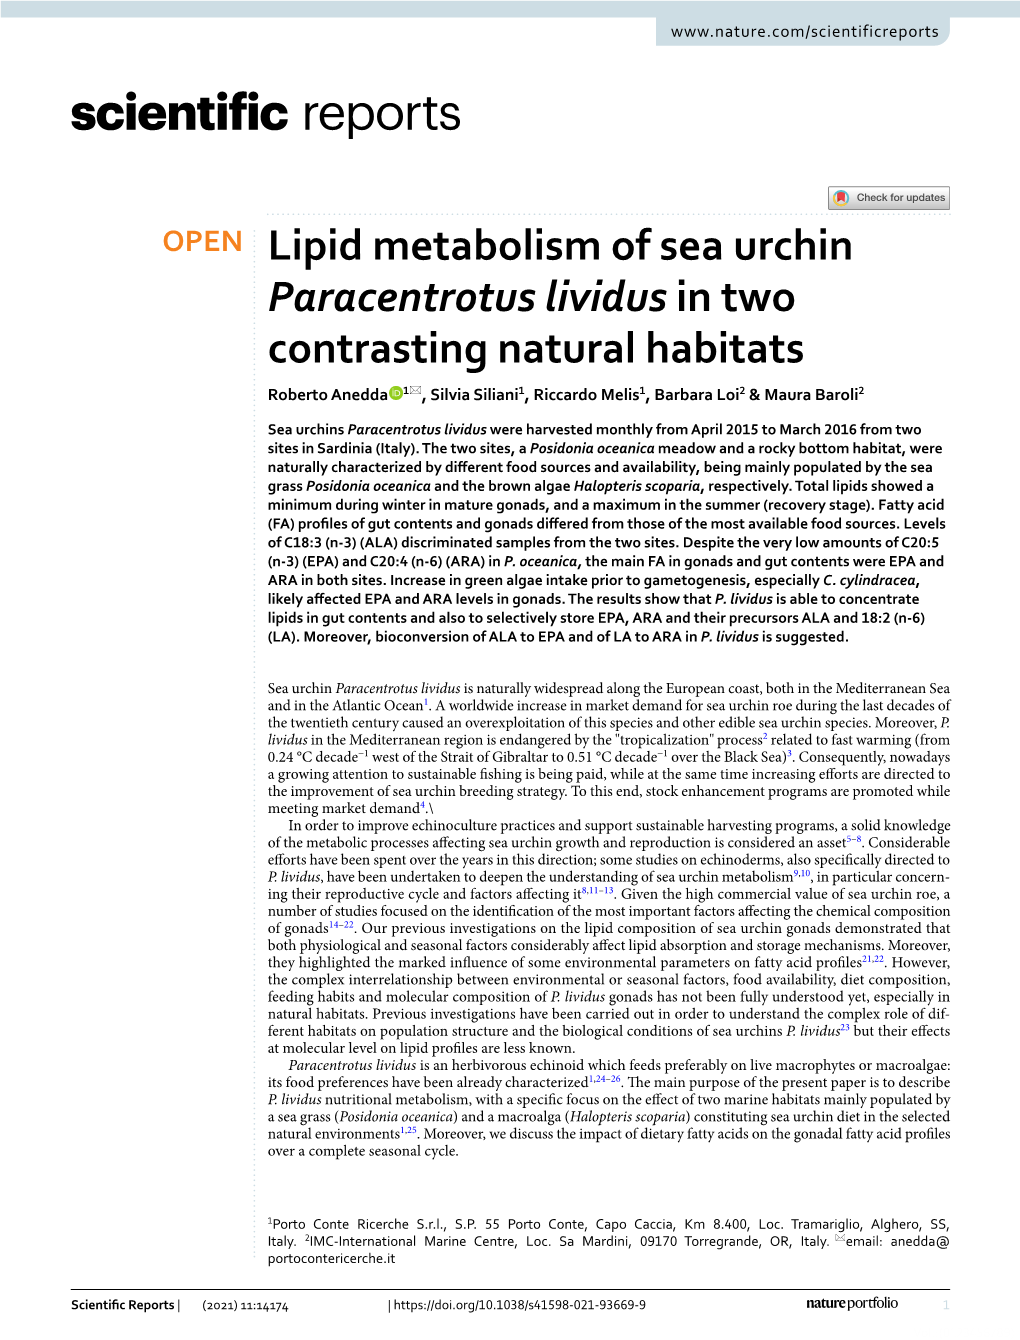 Lipid Metabolism of Sea Urchin Paracentrotus Lividus in Two